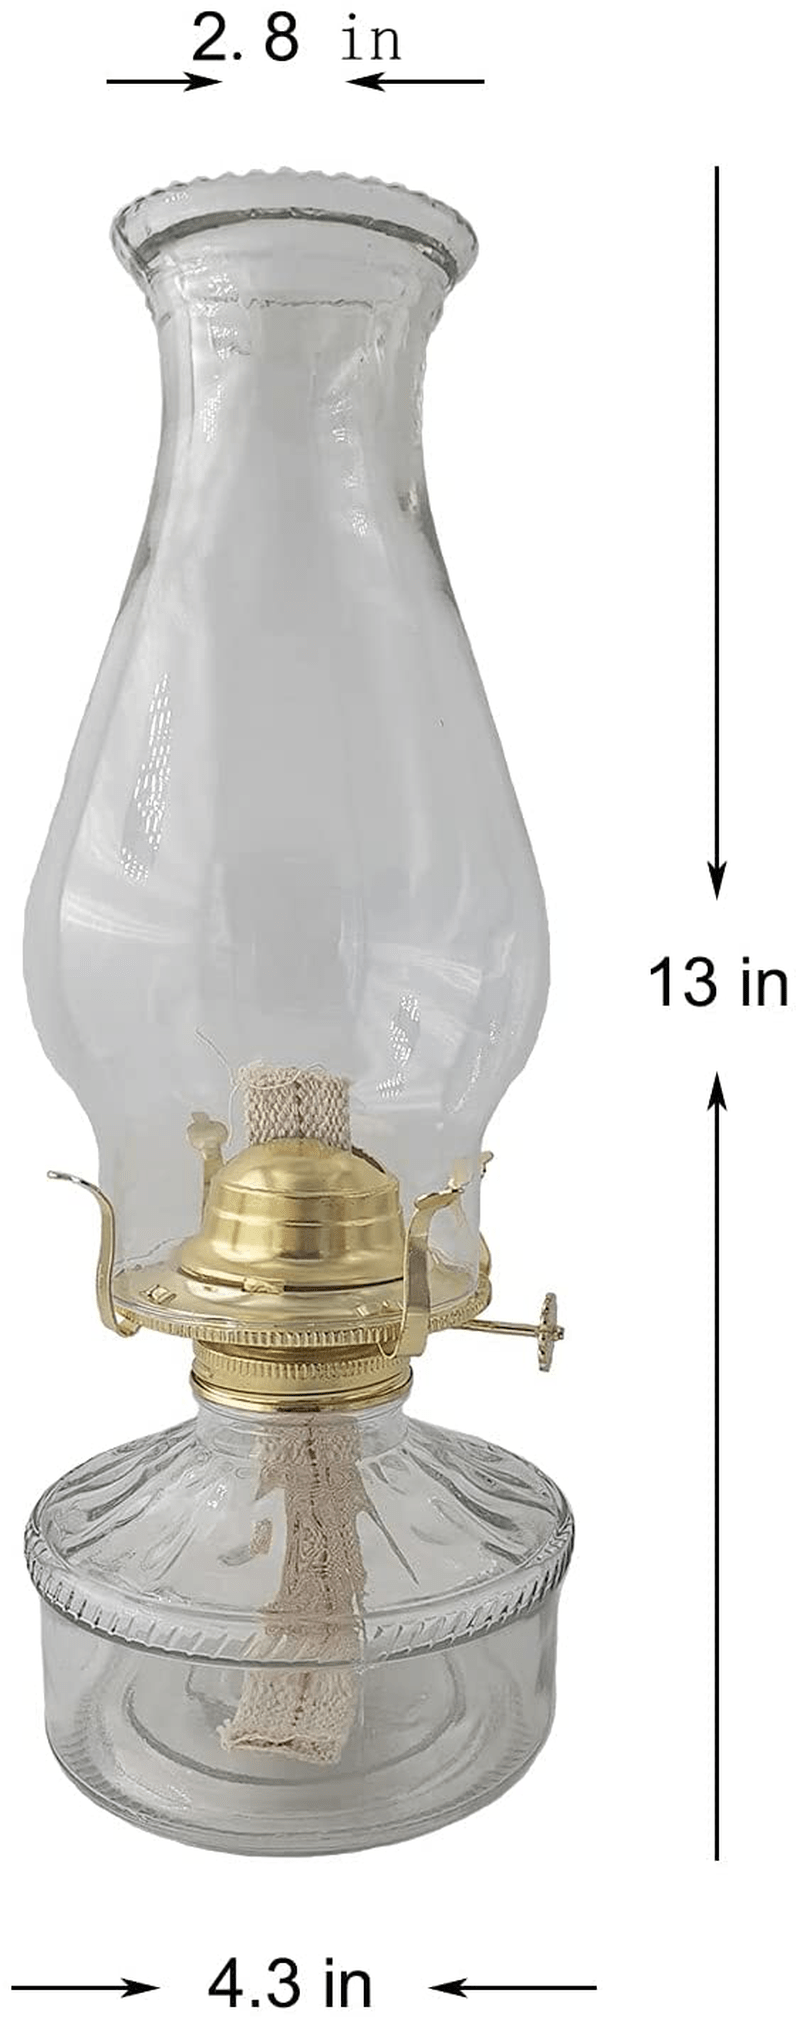 amanigo Oil-Lamp Glass Kerosene Lantern - Large Classic Oil Lamp for Indoor Use